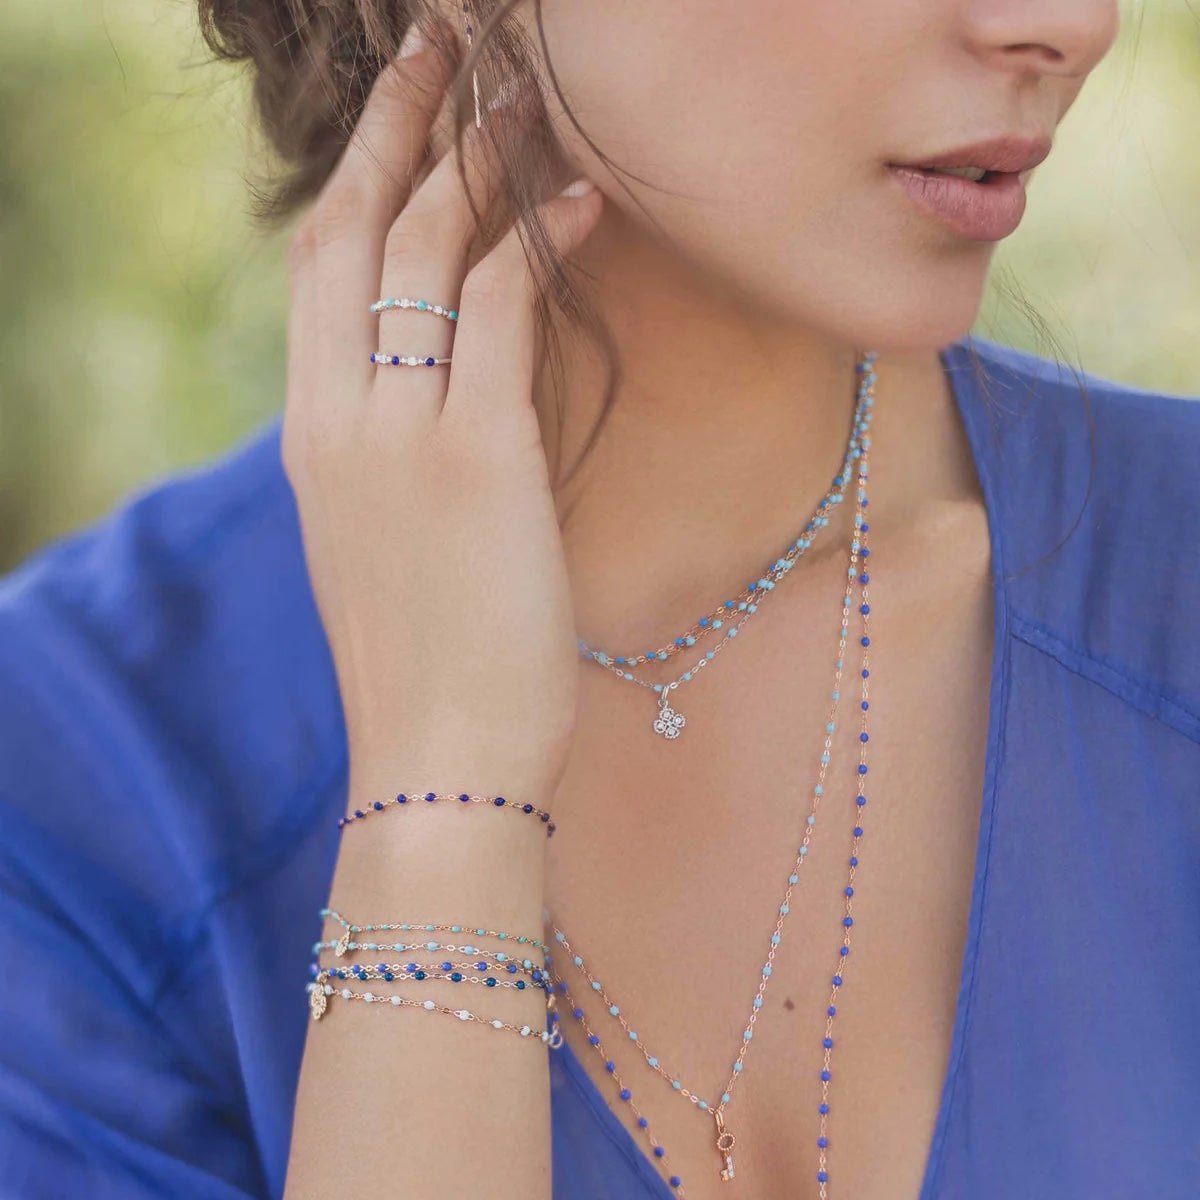 Gigi Clozeau 18K Gold Sapphire Blue Resin Beaded "Classic" Bracelet